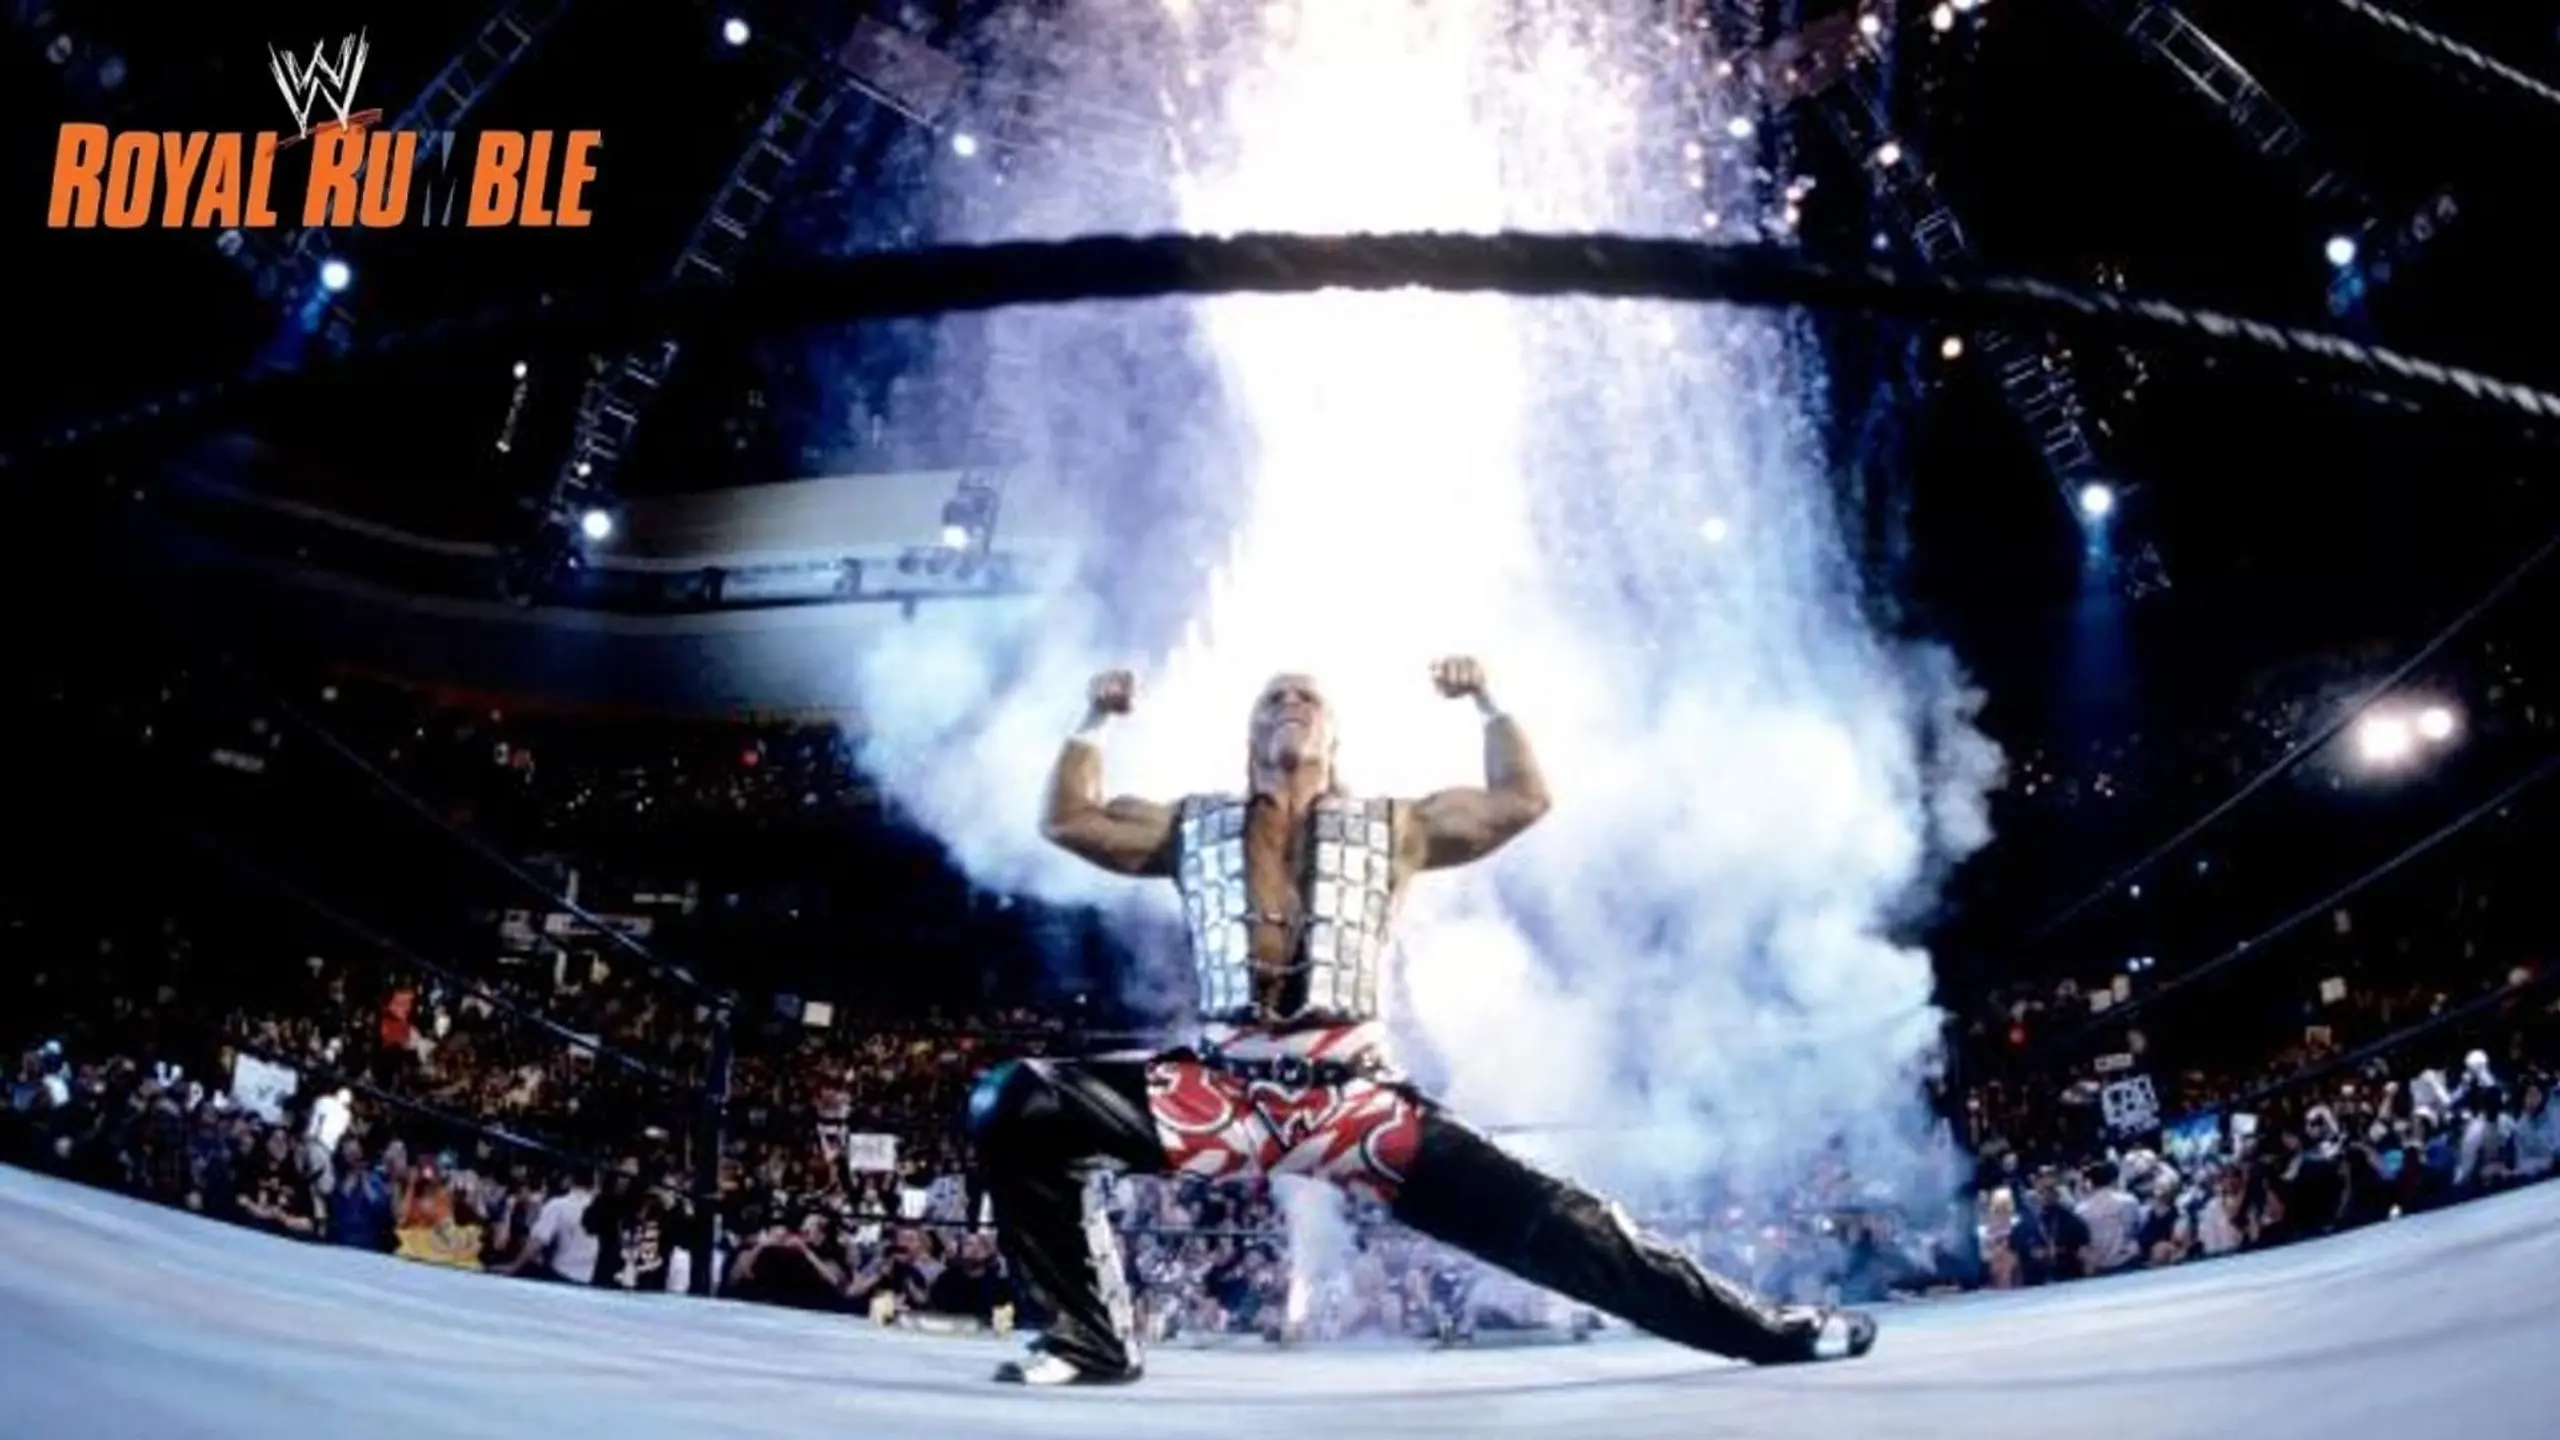 WWE Royal Rumble 2003